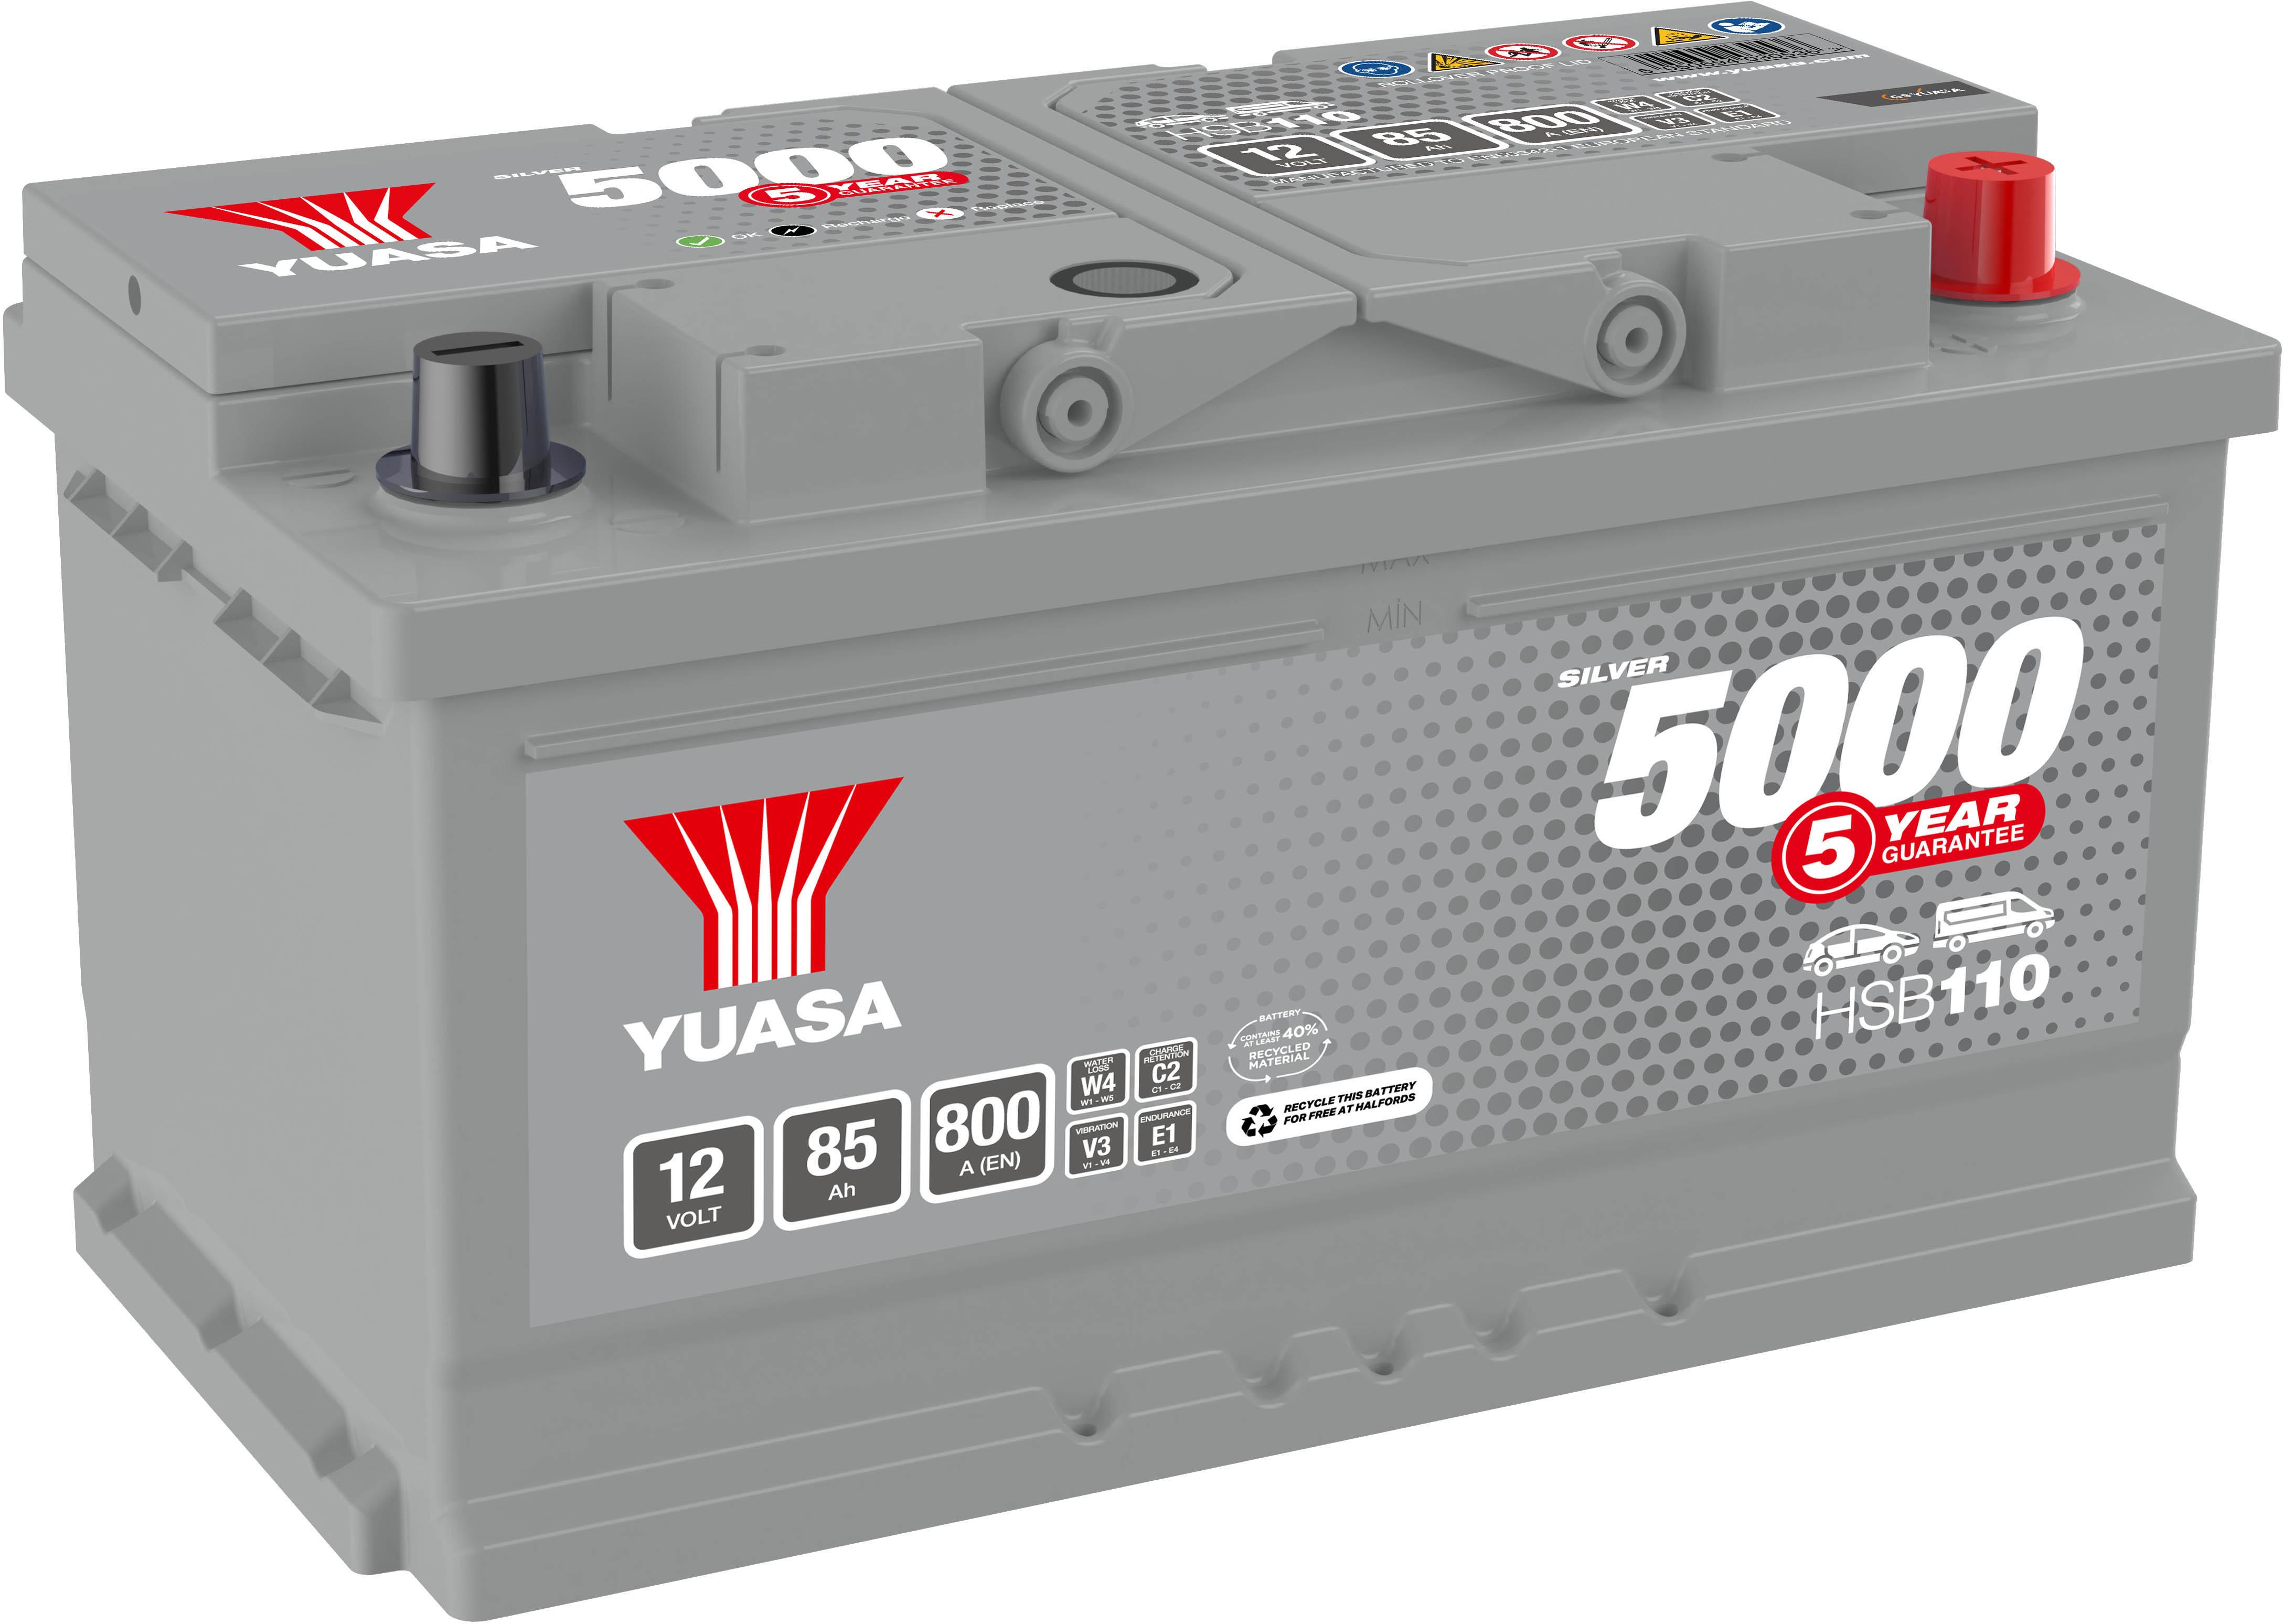 Yuasa Hsb110 Silver 12V Car Battery 5 Year Guarantee